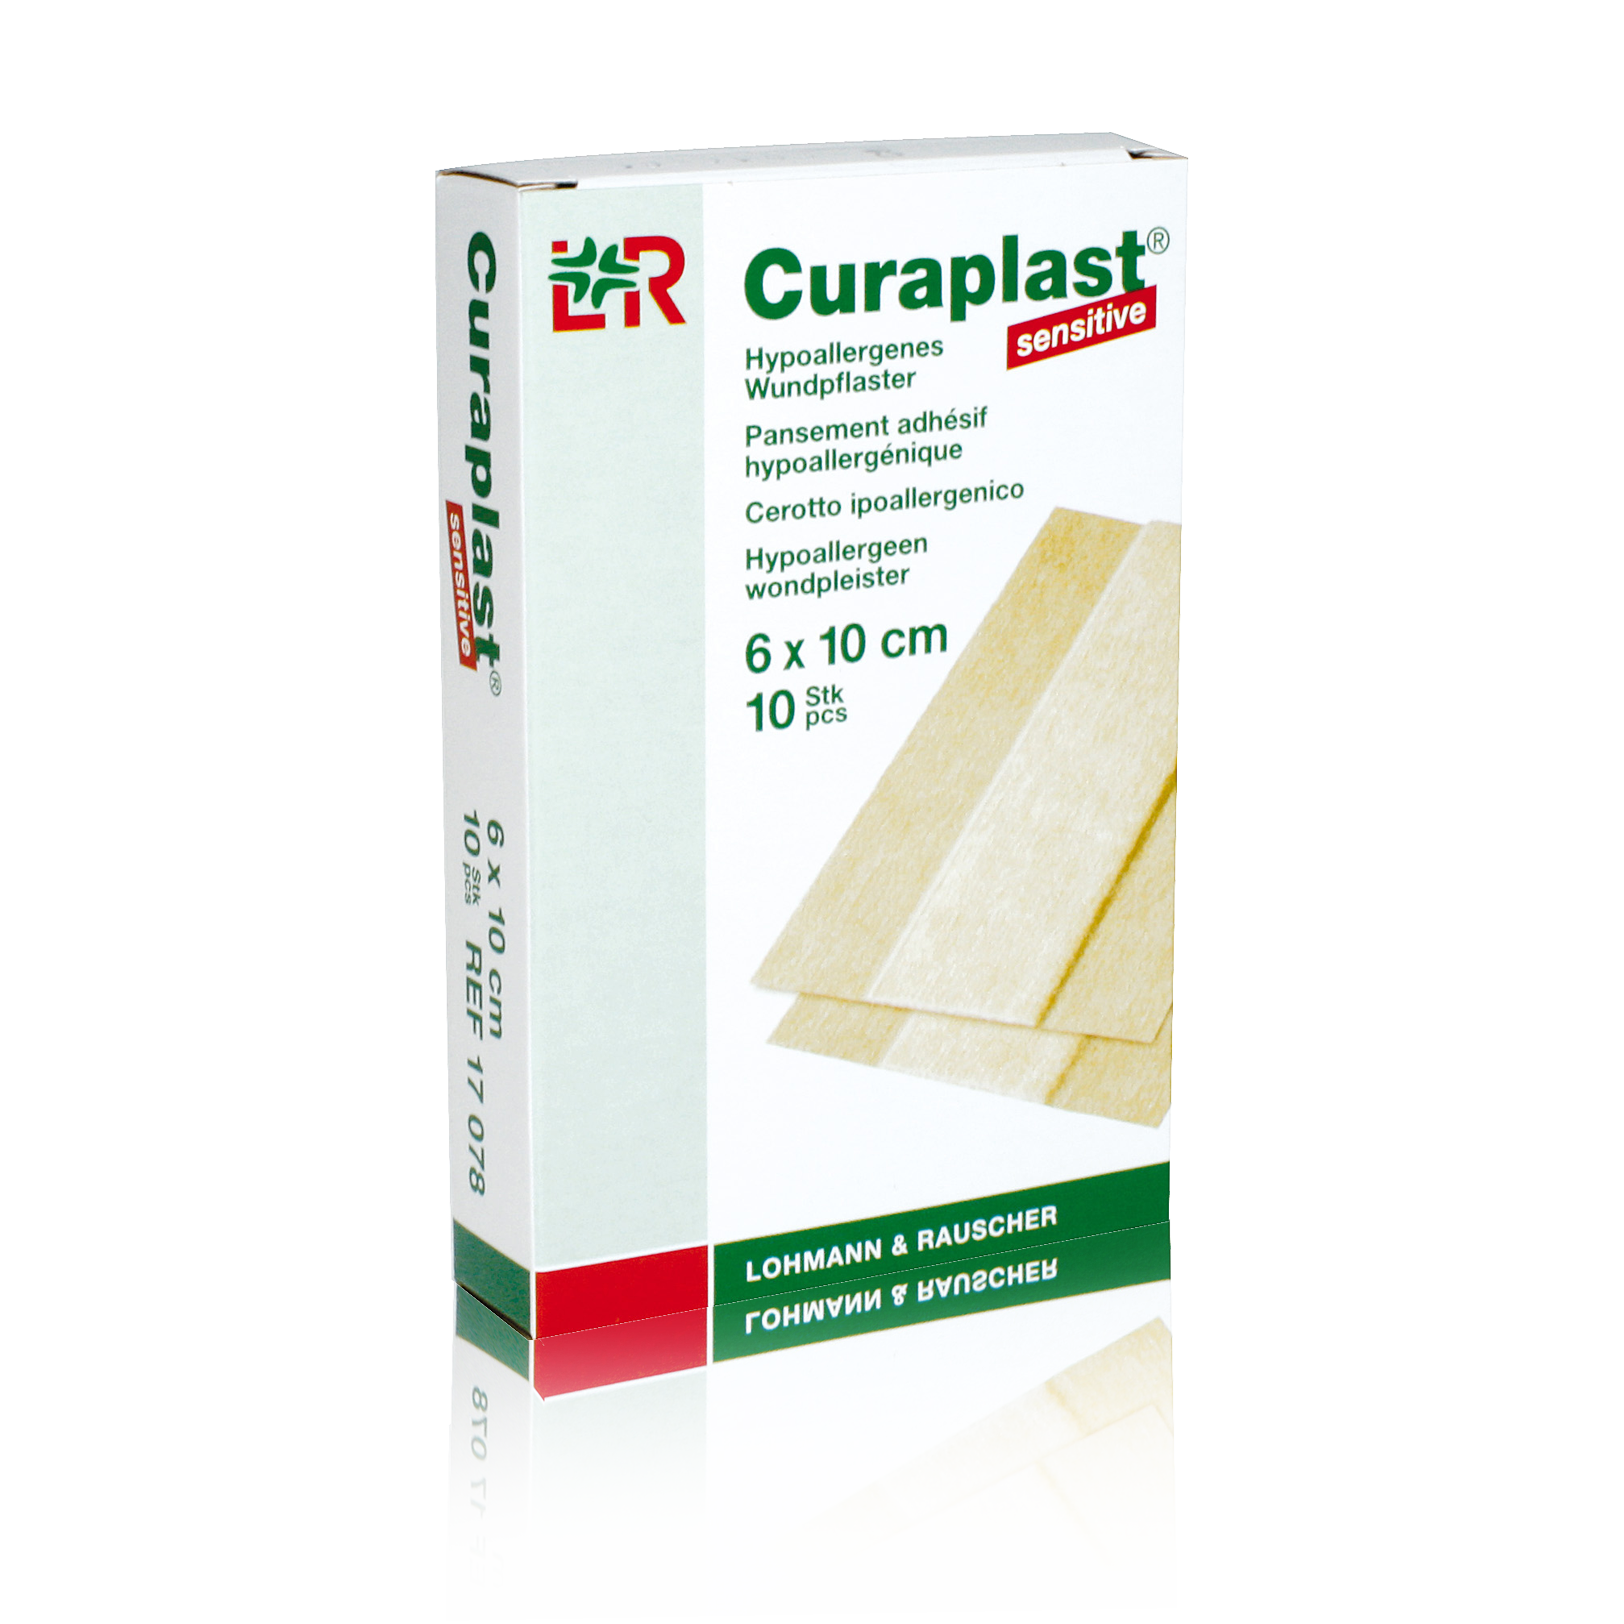 LR Curaplast sensitive 6 cm x 10 cm, 1 Pack (10 Stk.)